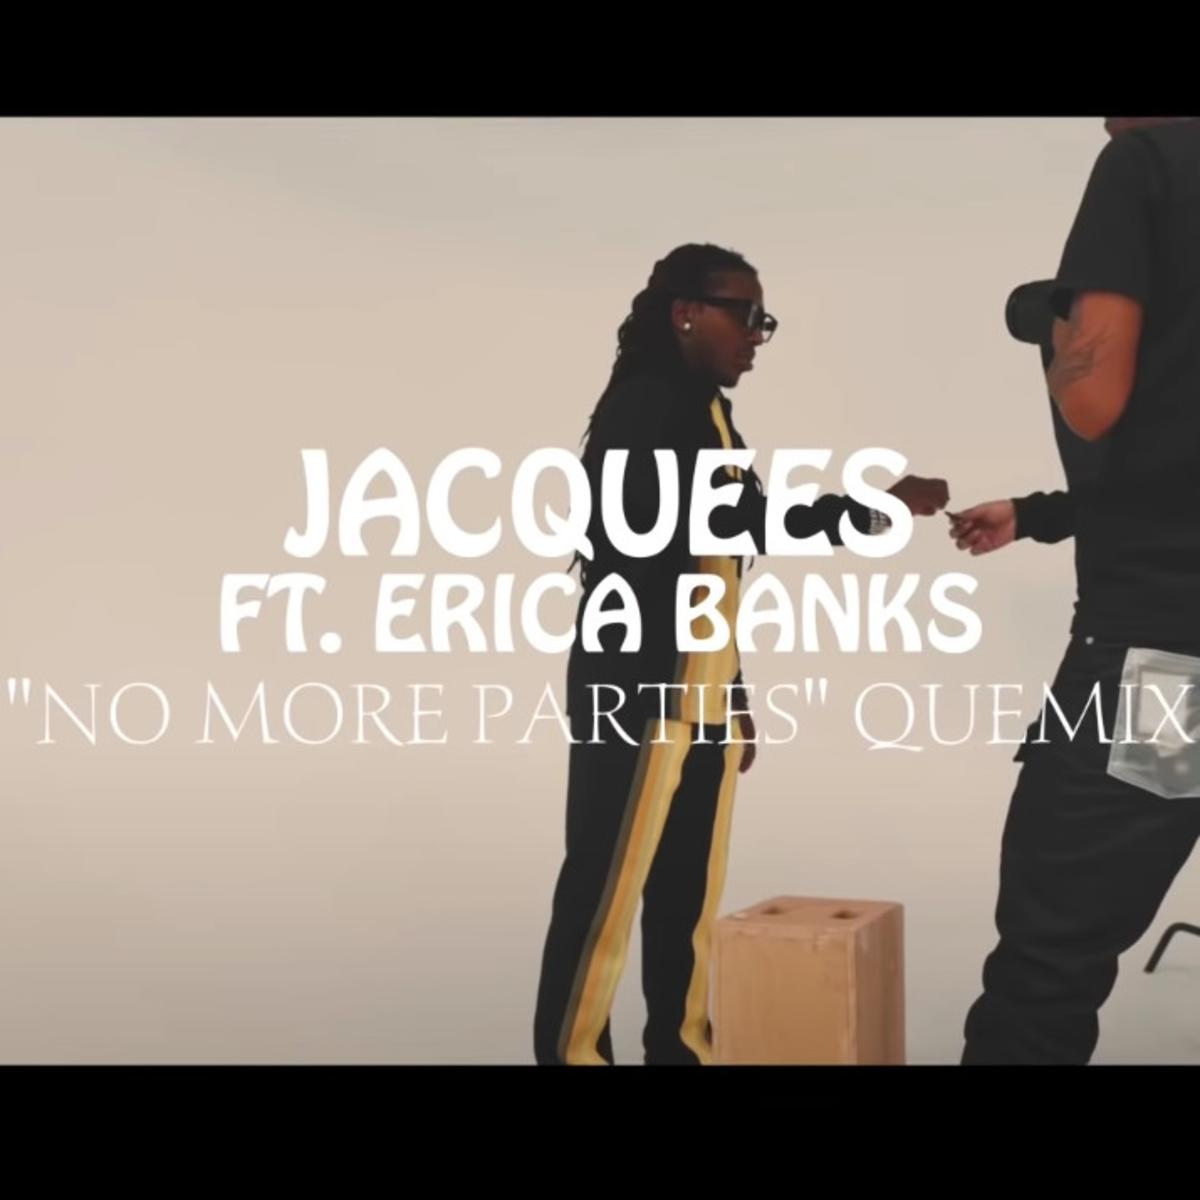 Jacquees & Erica Banks Unite For “No More Parties (Quemix)”